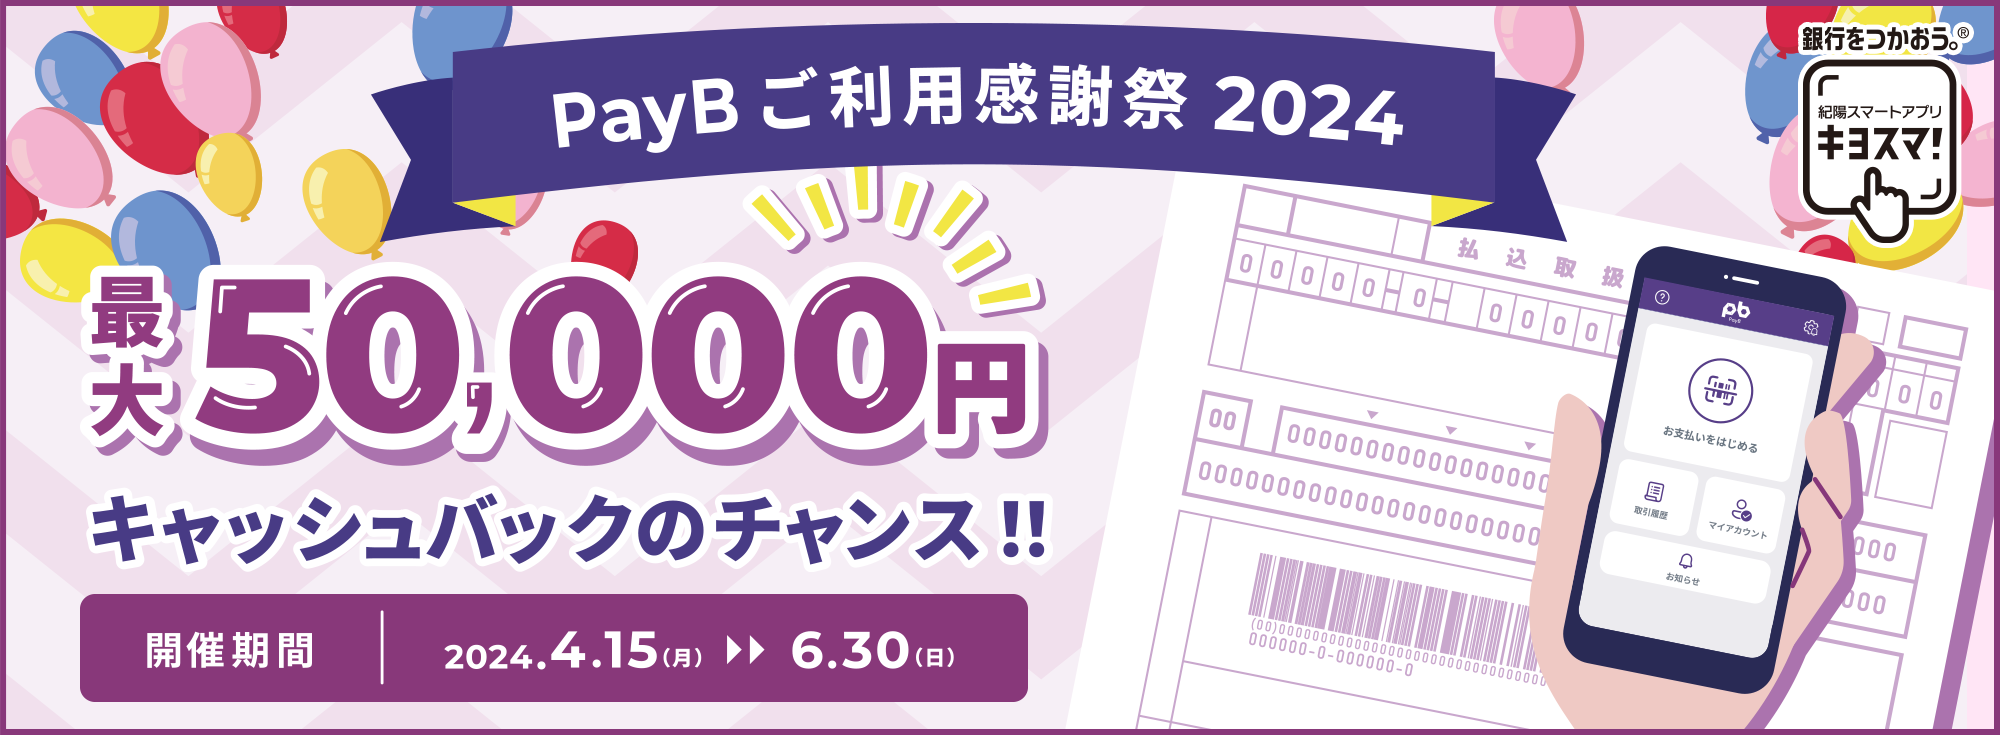 PayBご利用感謝祭2024